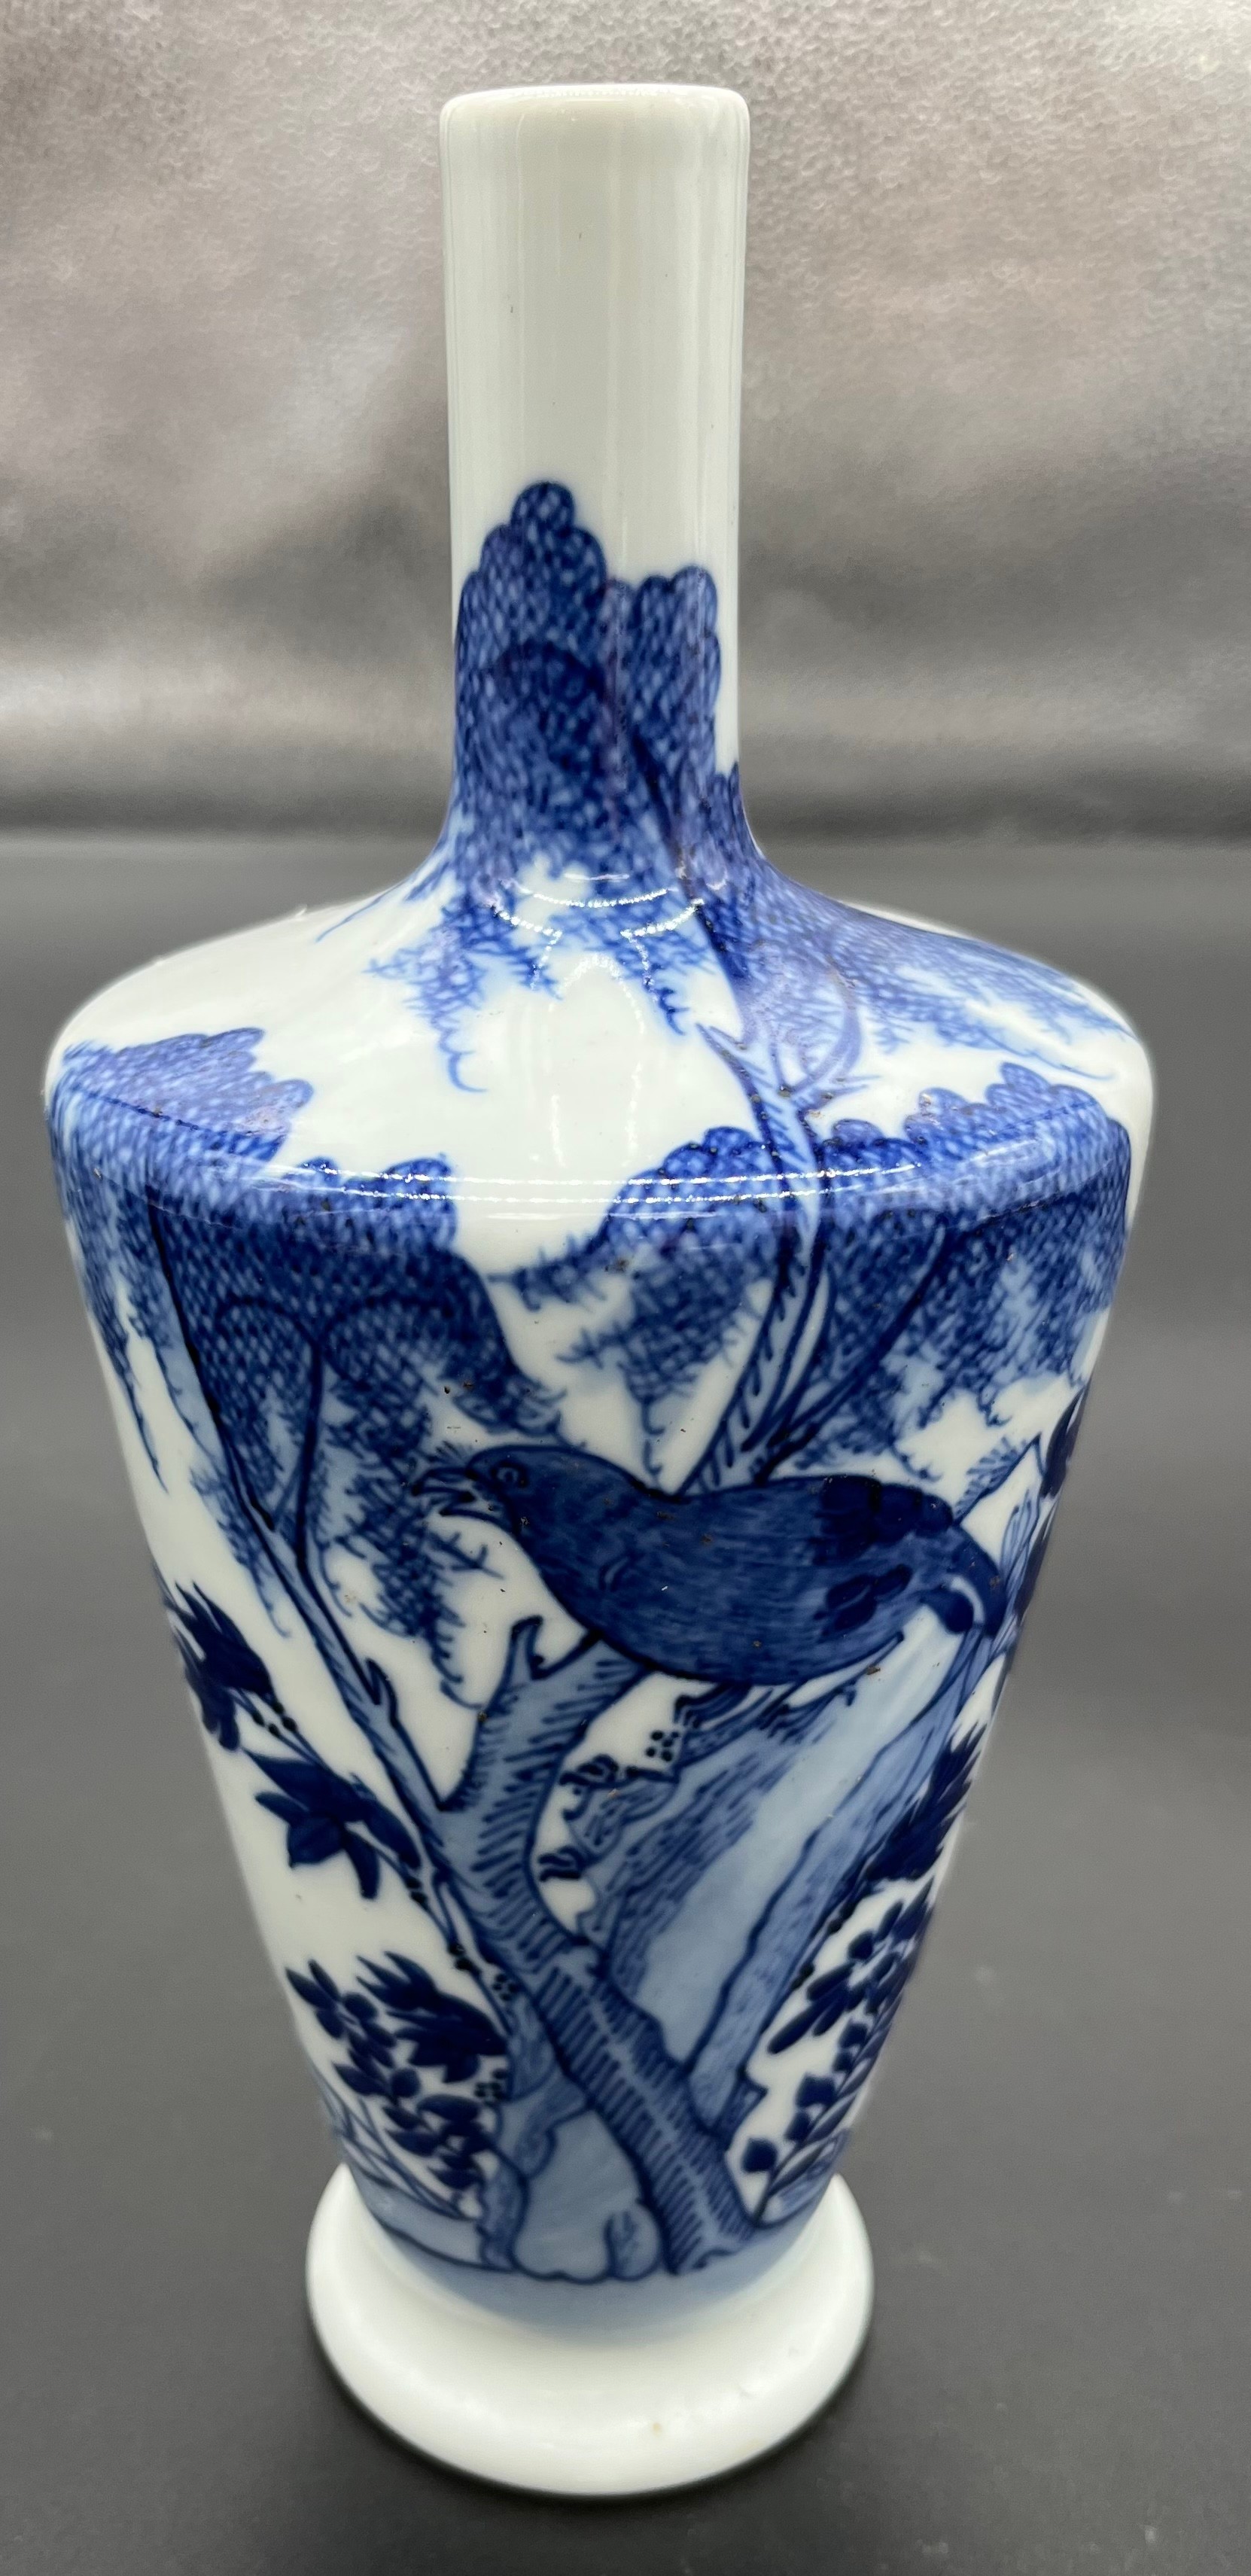 A Chinese blue and white vase, Da Qing Kangxi Nian Zhi era marked. [23cm high]